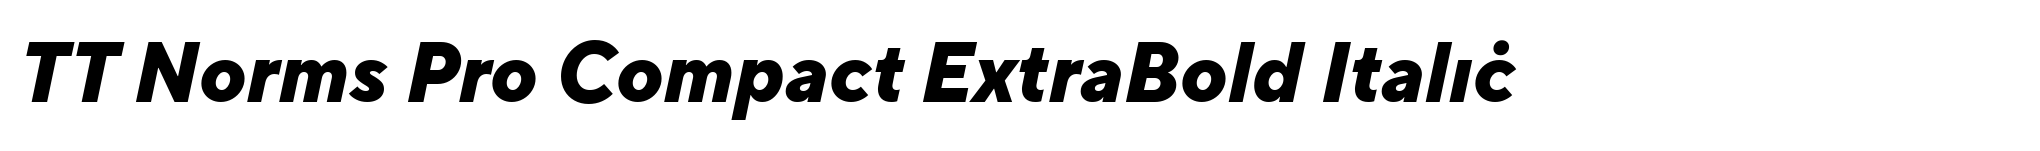 TT Norms Pro Compact ExtraBold Italic image